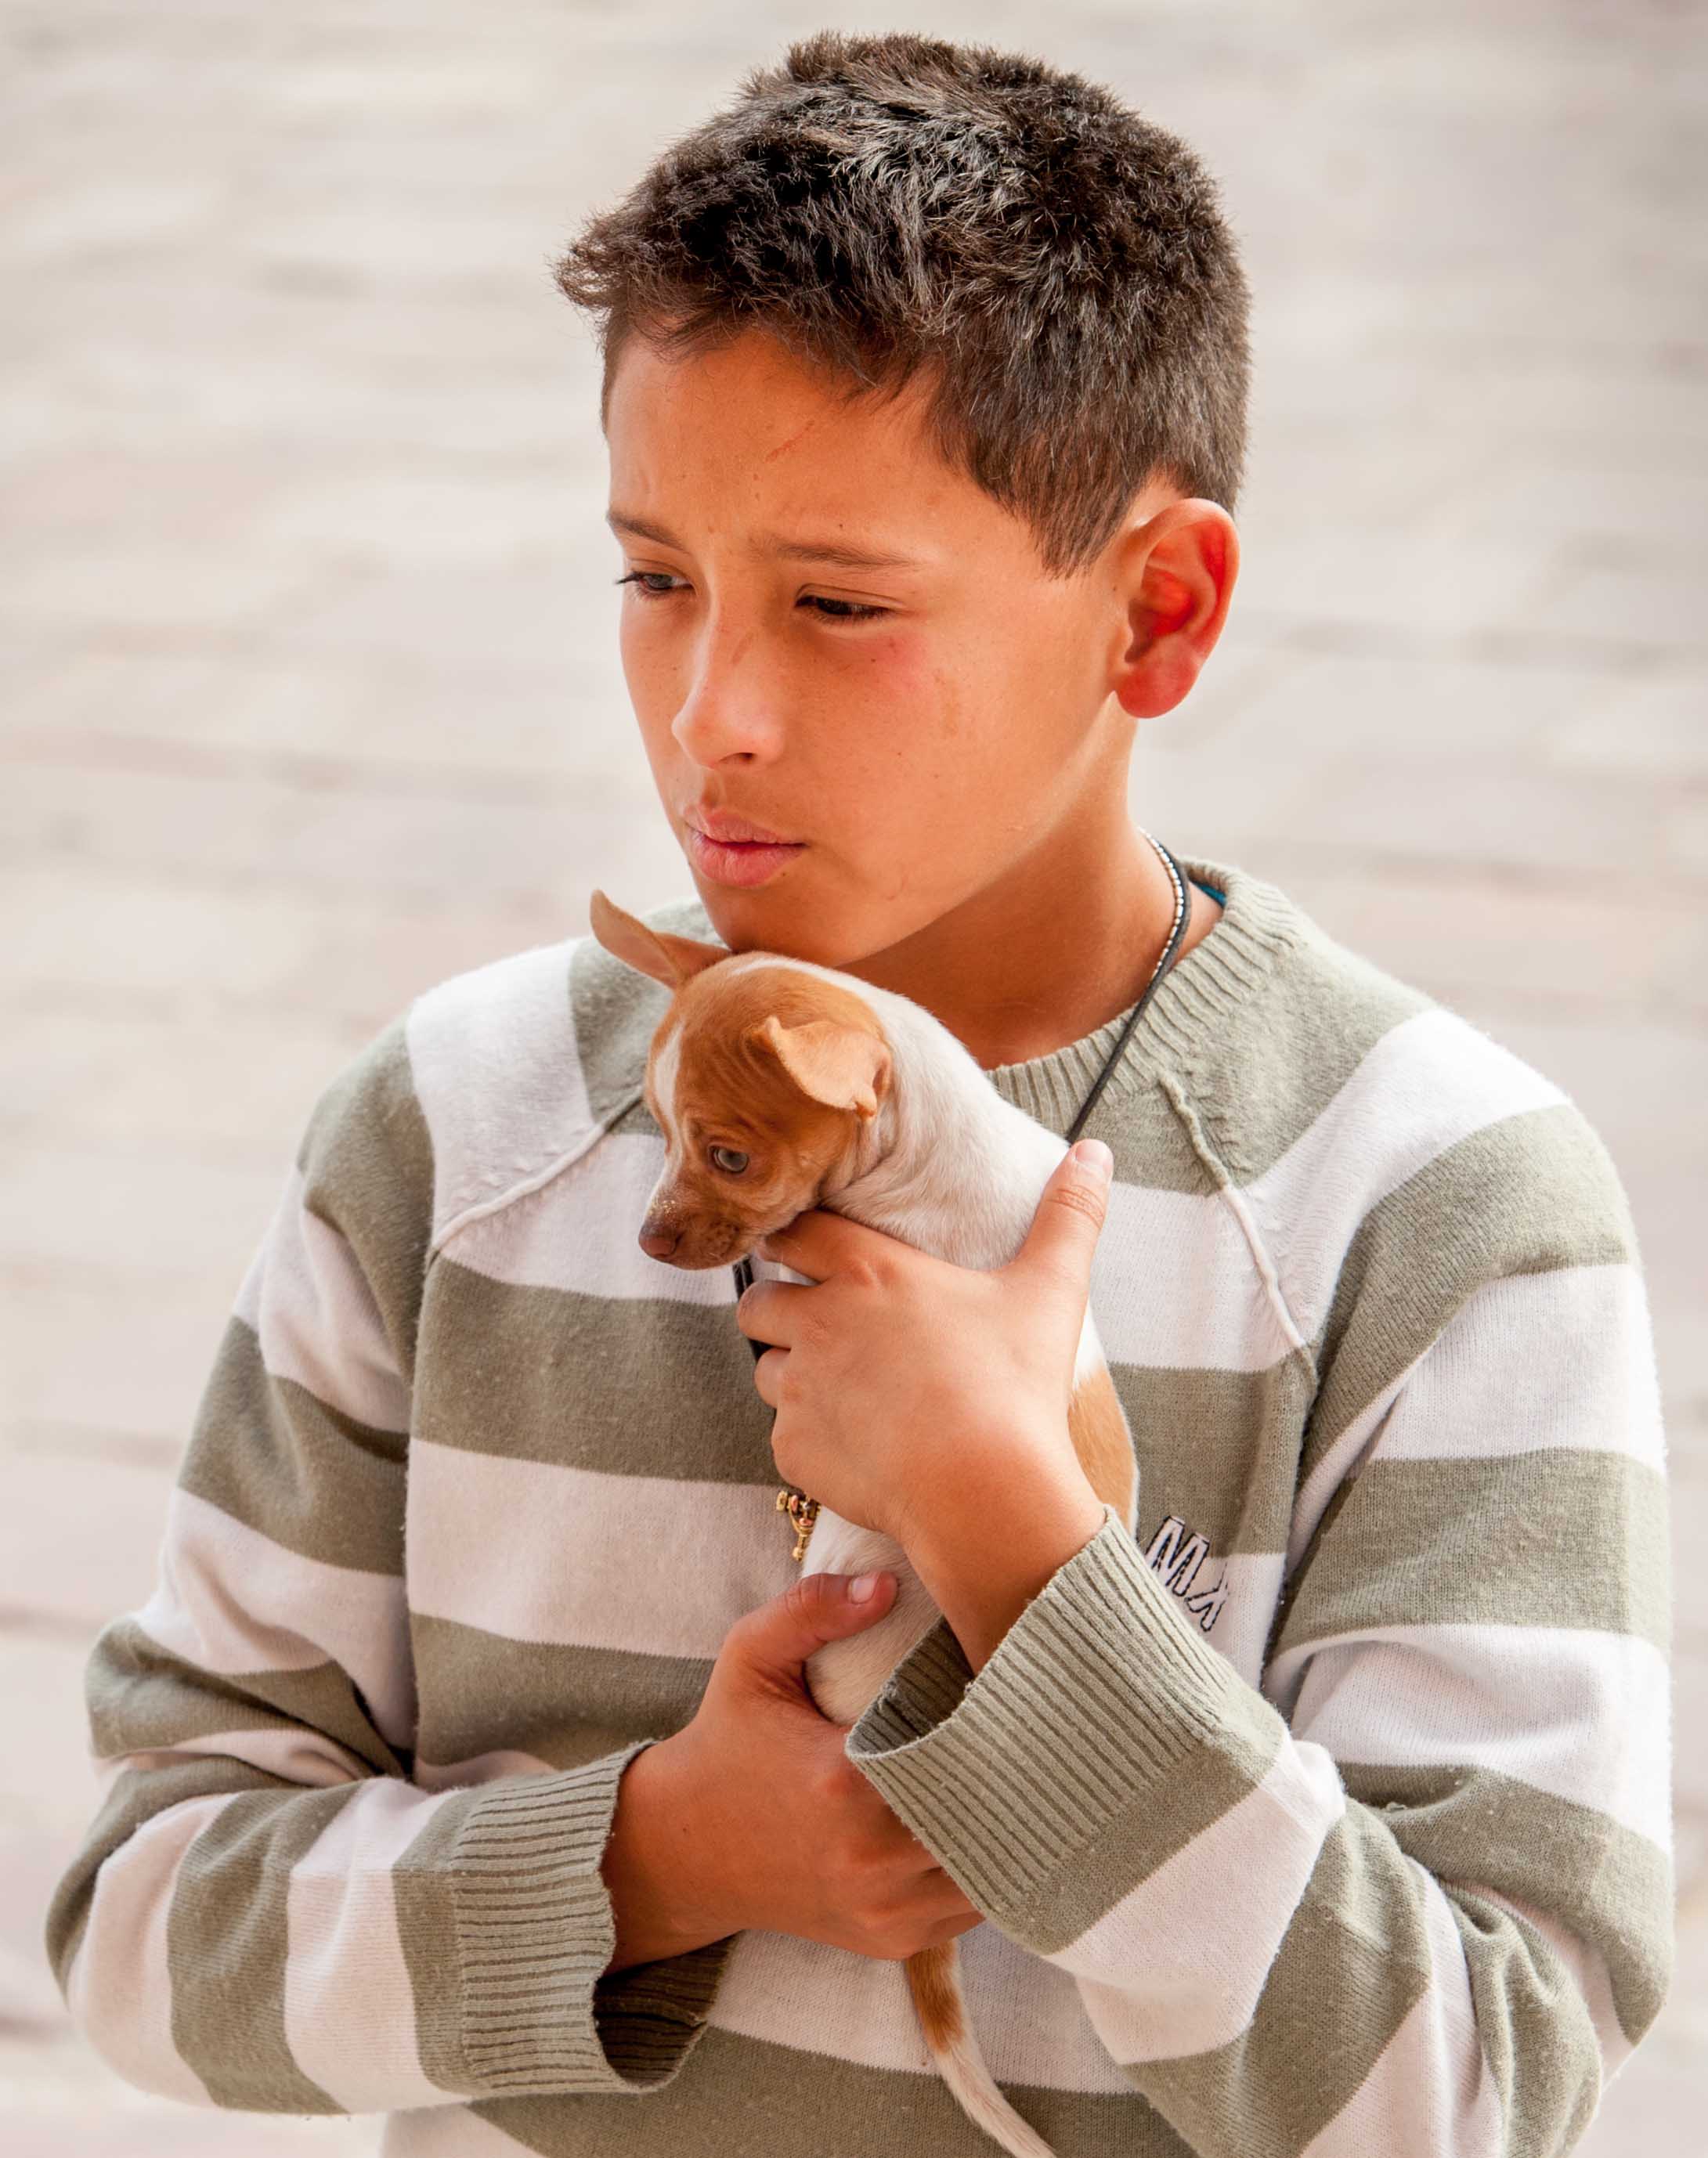 Boy with Dog in Mexico.jpg